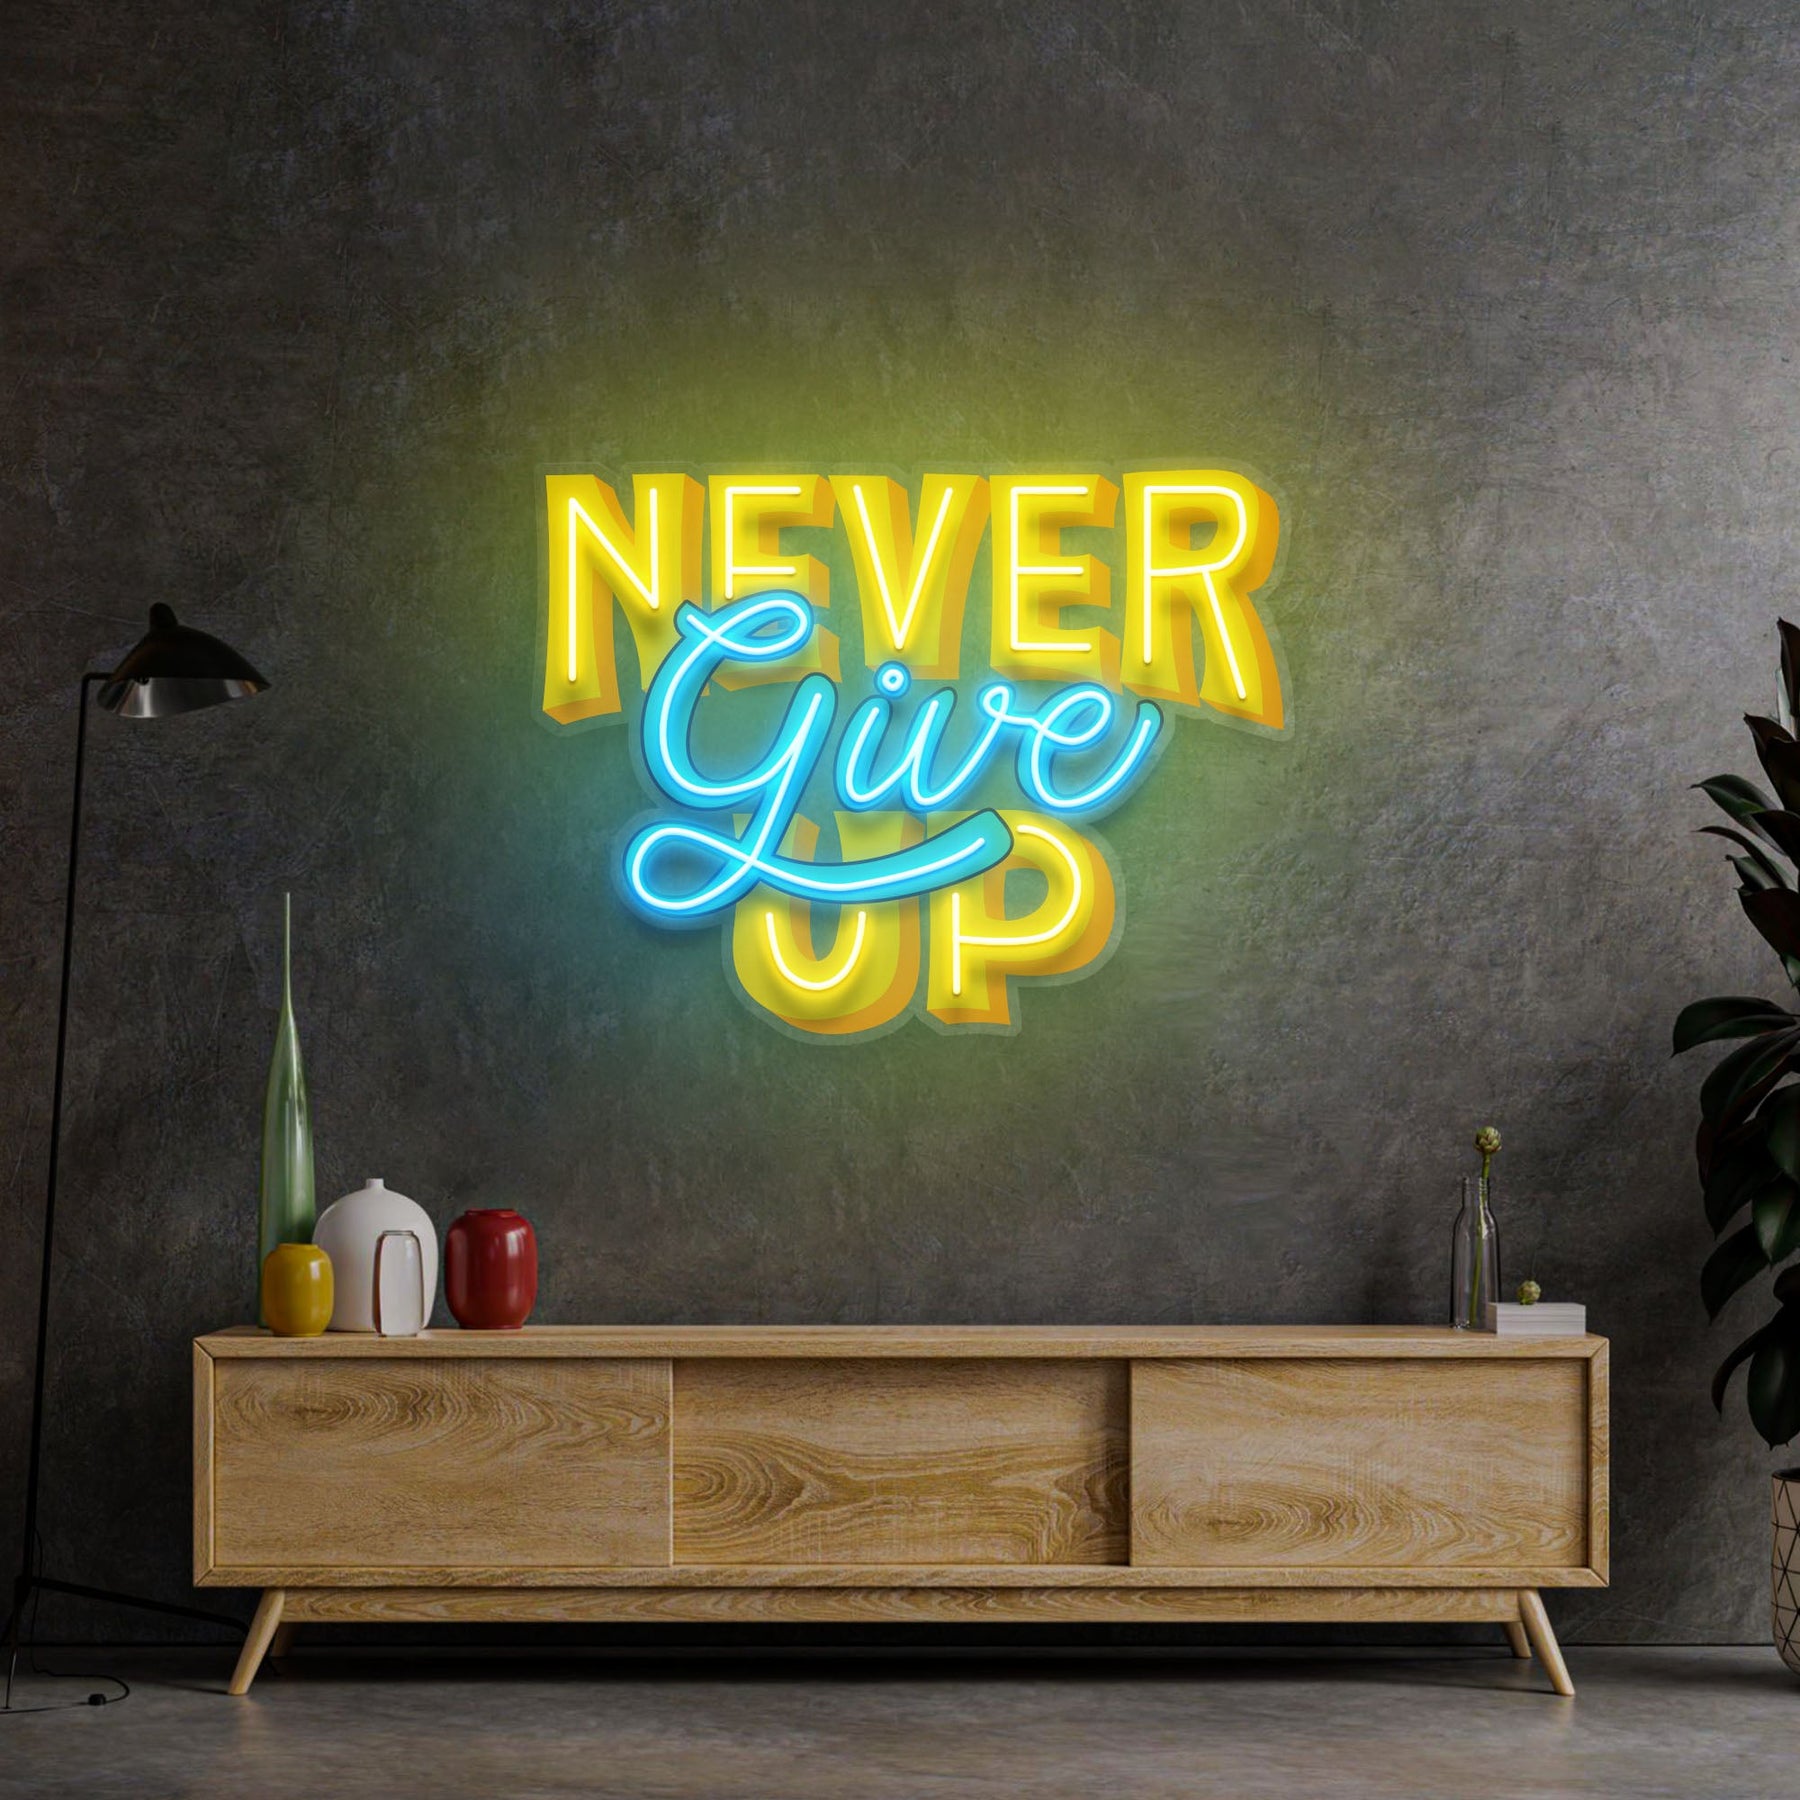 Never Give Up LED Neon Sign Light Pop Art